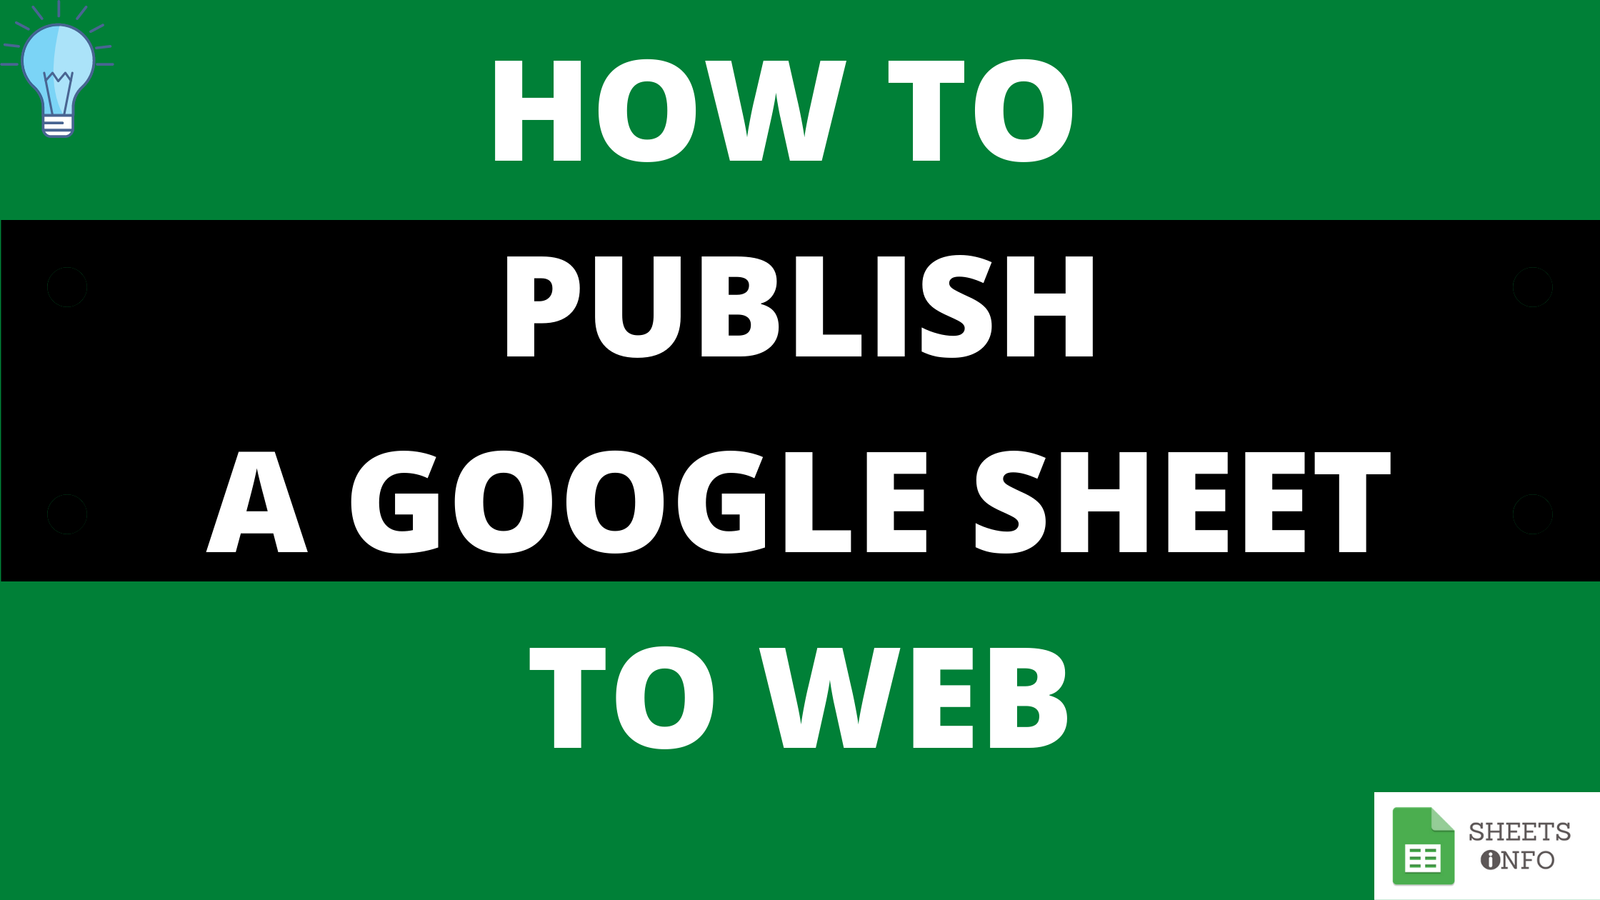 Publish a Google Sheet to Web